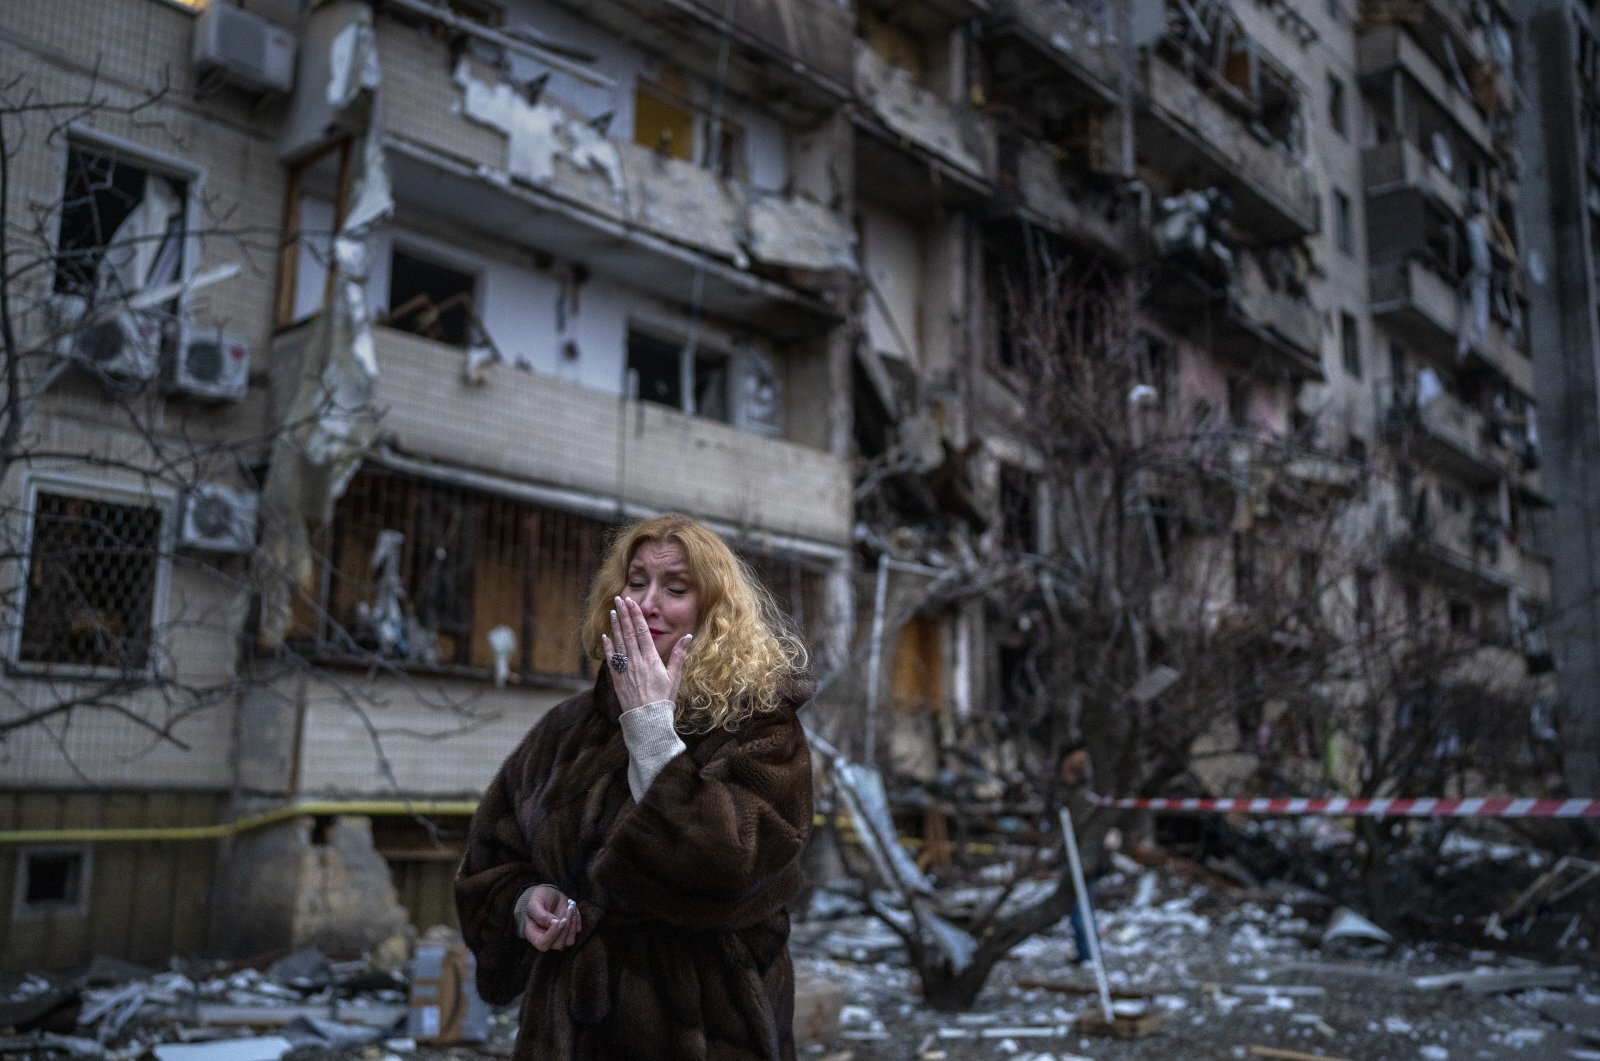 Rusya-Ukrayna savaşının bilançosu: 3'ü çocuk 198 kişi hayatını kaybetti